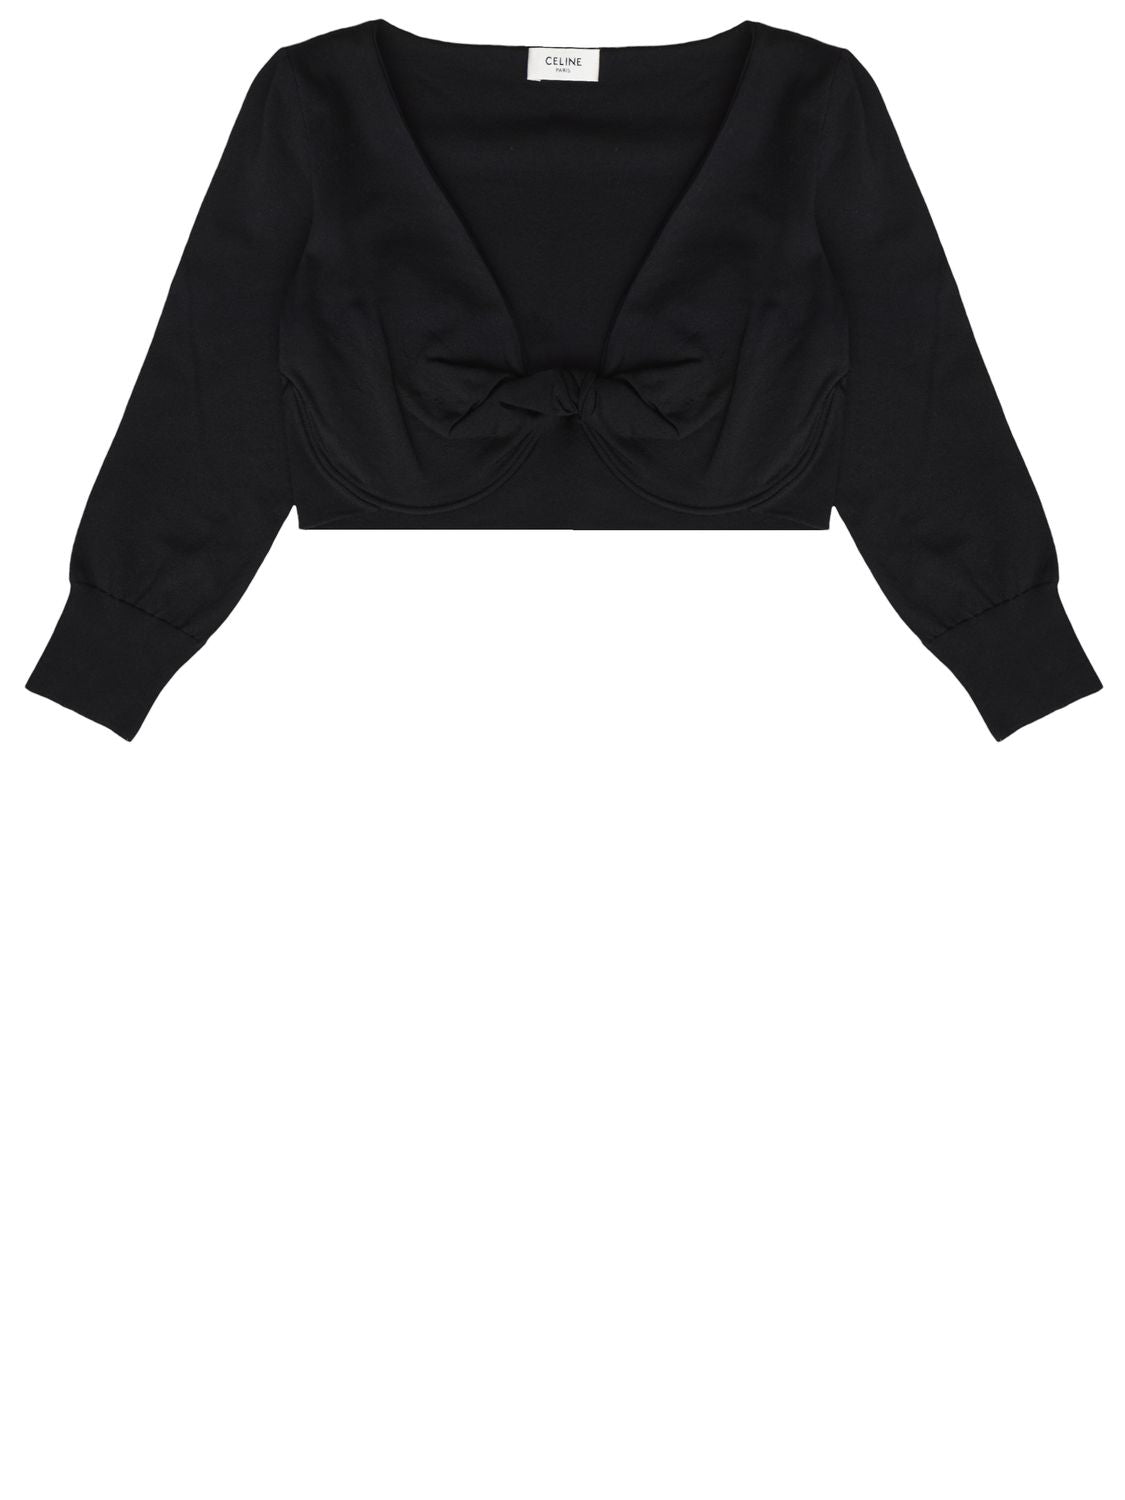 CELINE Black Draped Three-Quarter Sleeve Crop Top in Stretch Silk Blend for Women